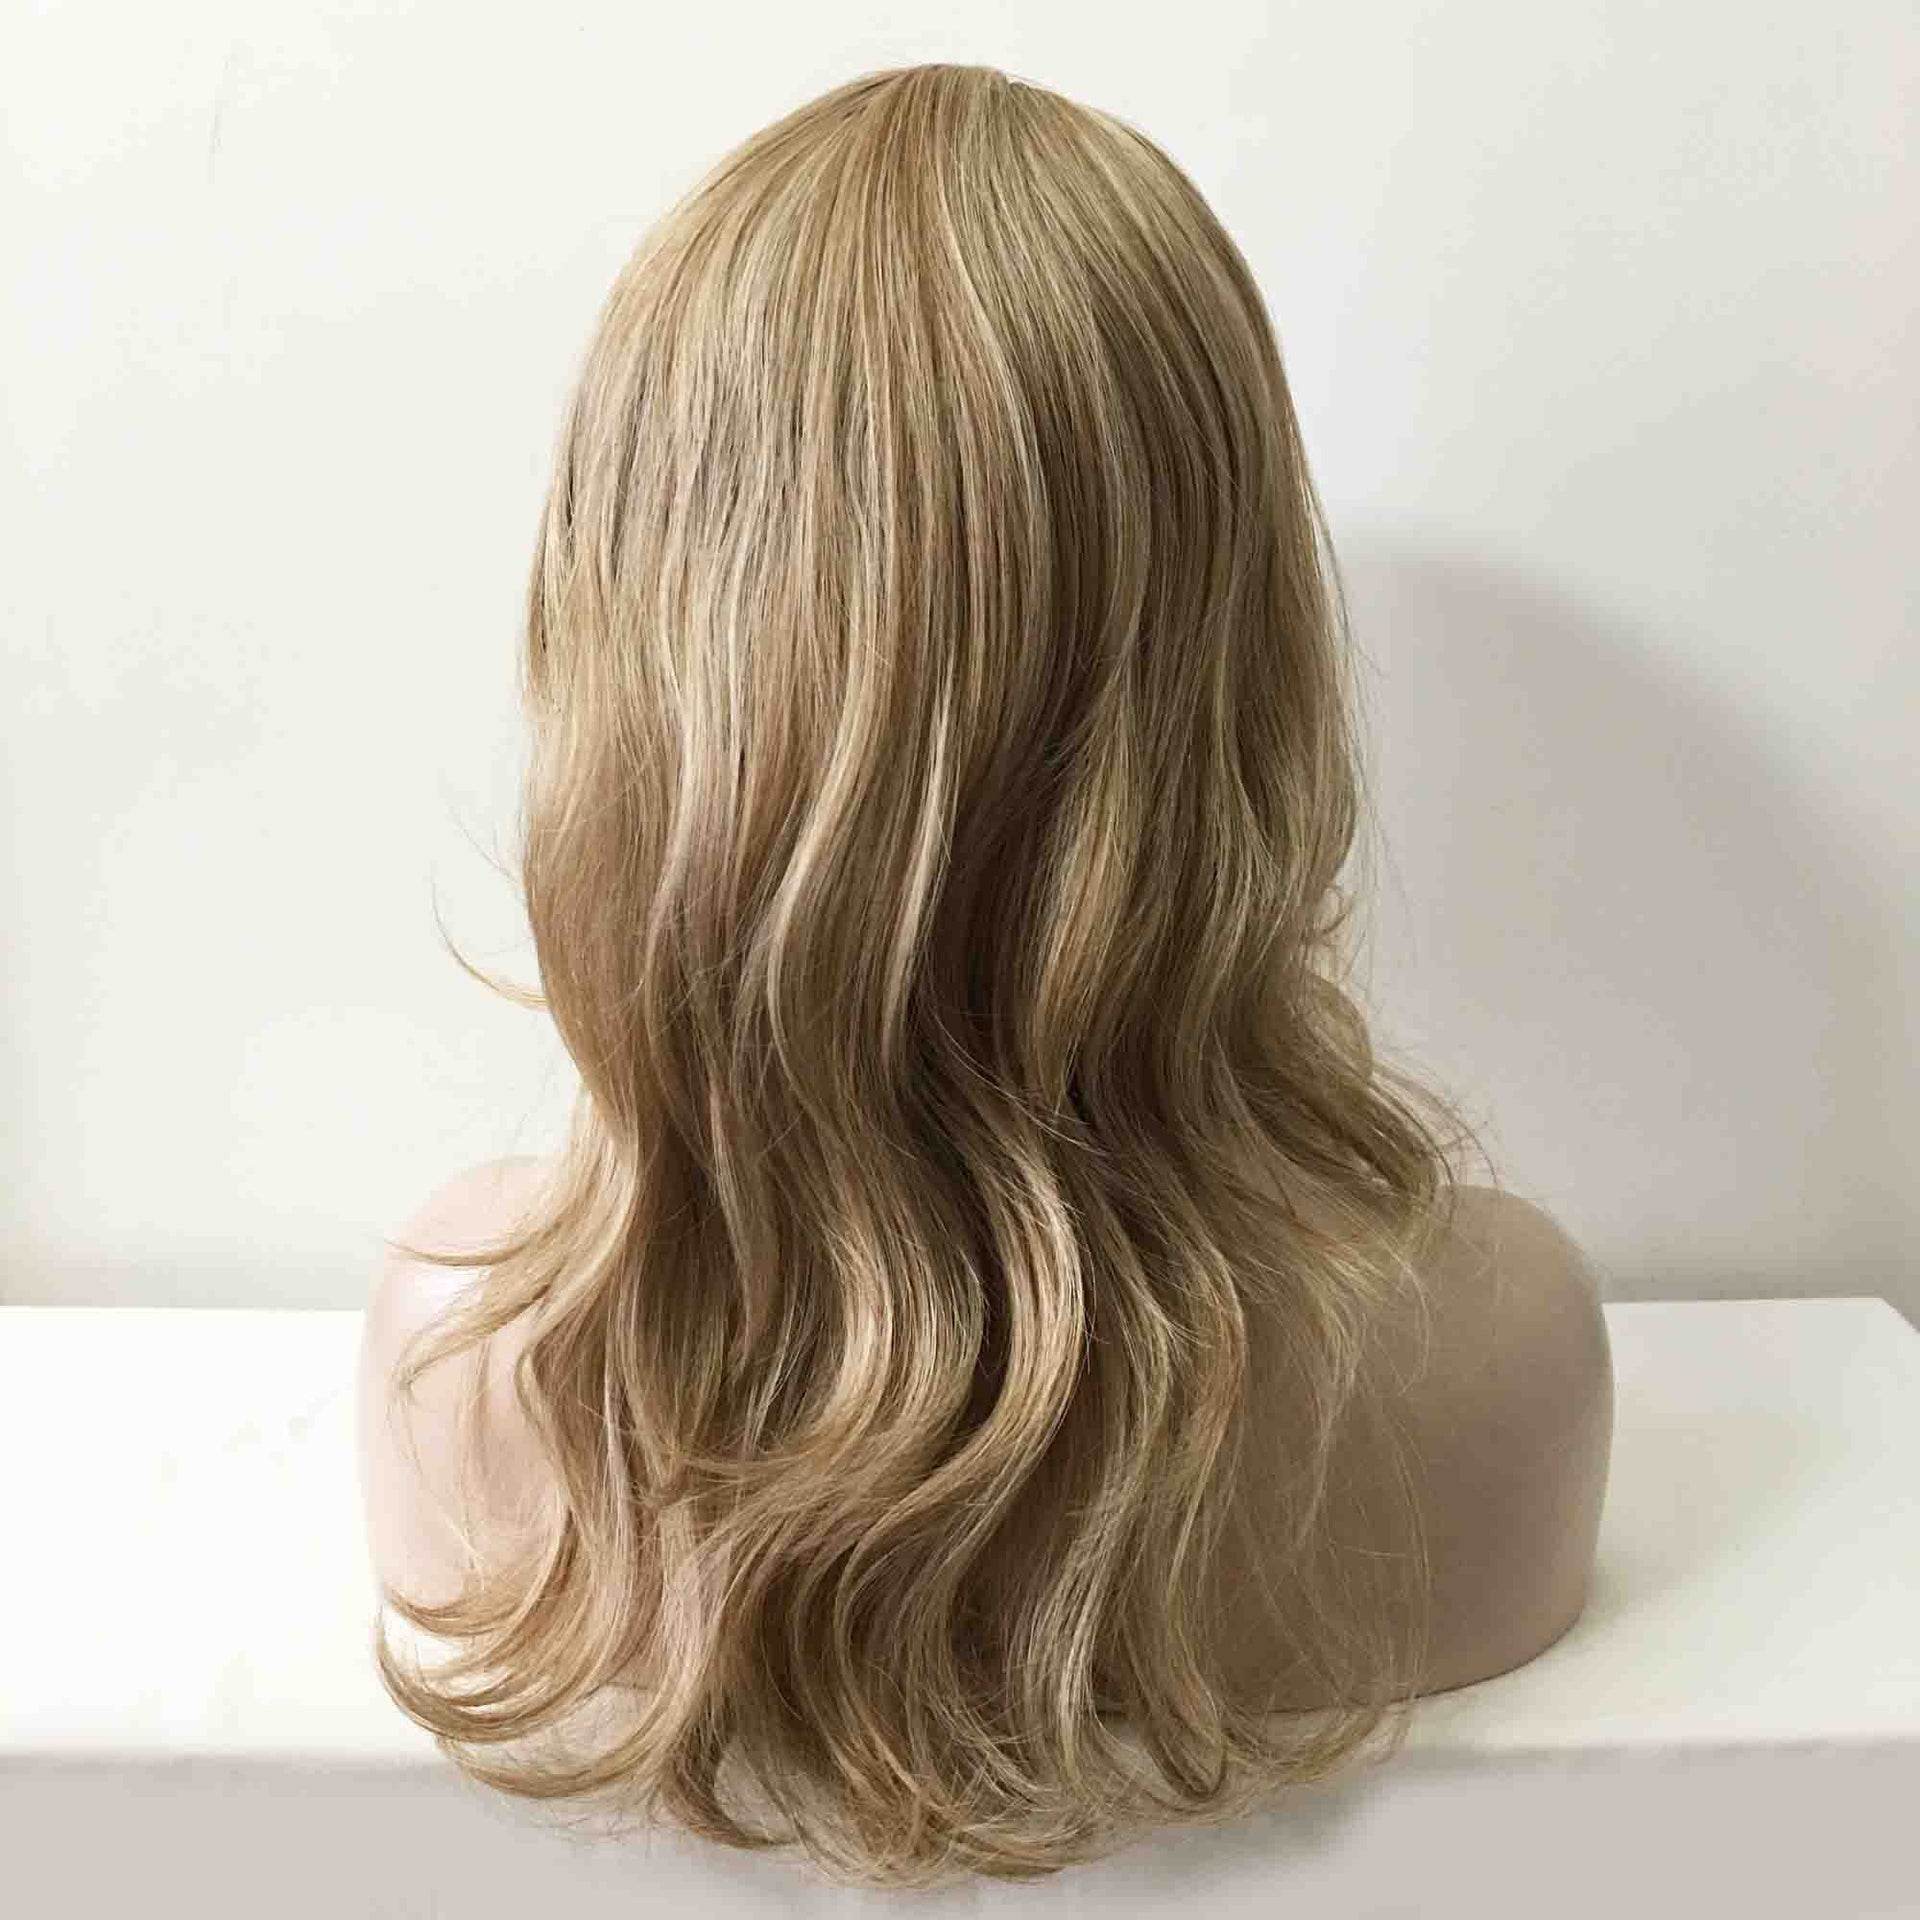 nevermindyrhead Women Ash Blonde Long Curly Side Part Fringe Bangs Layered Wig